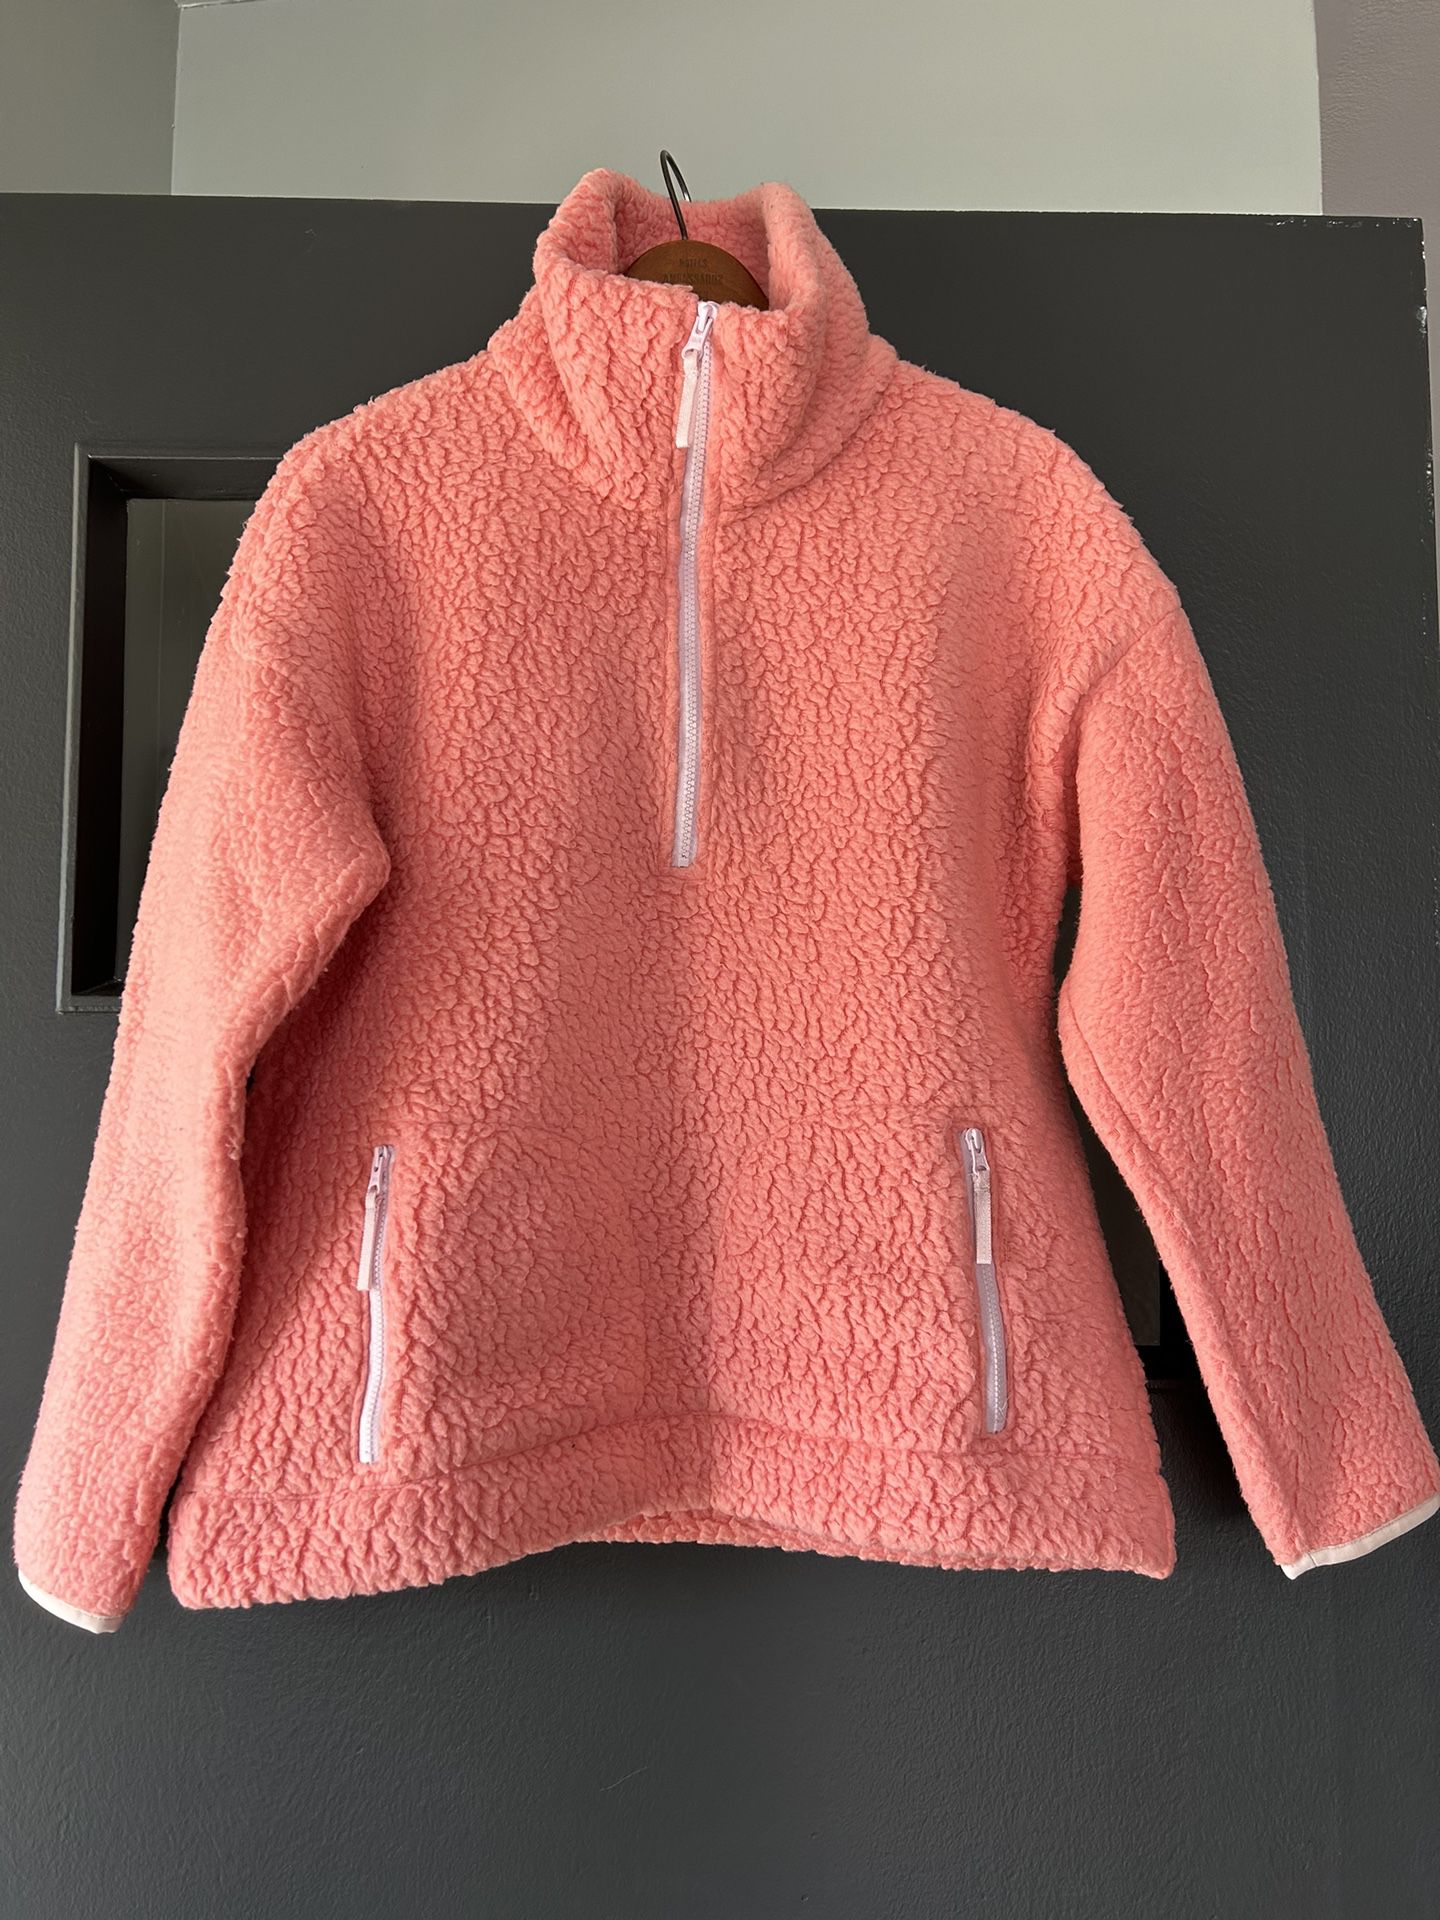 J. Crew Polartec® sherpa fleece half-zip pullover jacket (Size: 